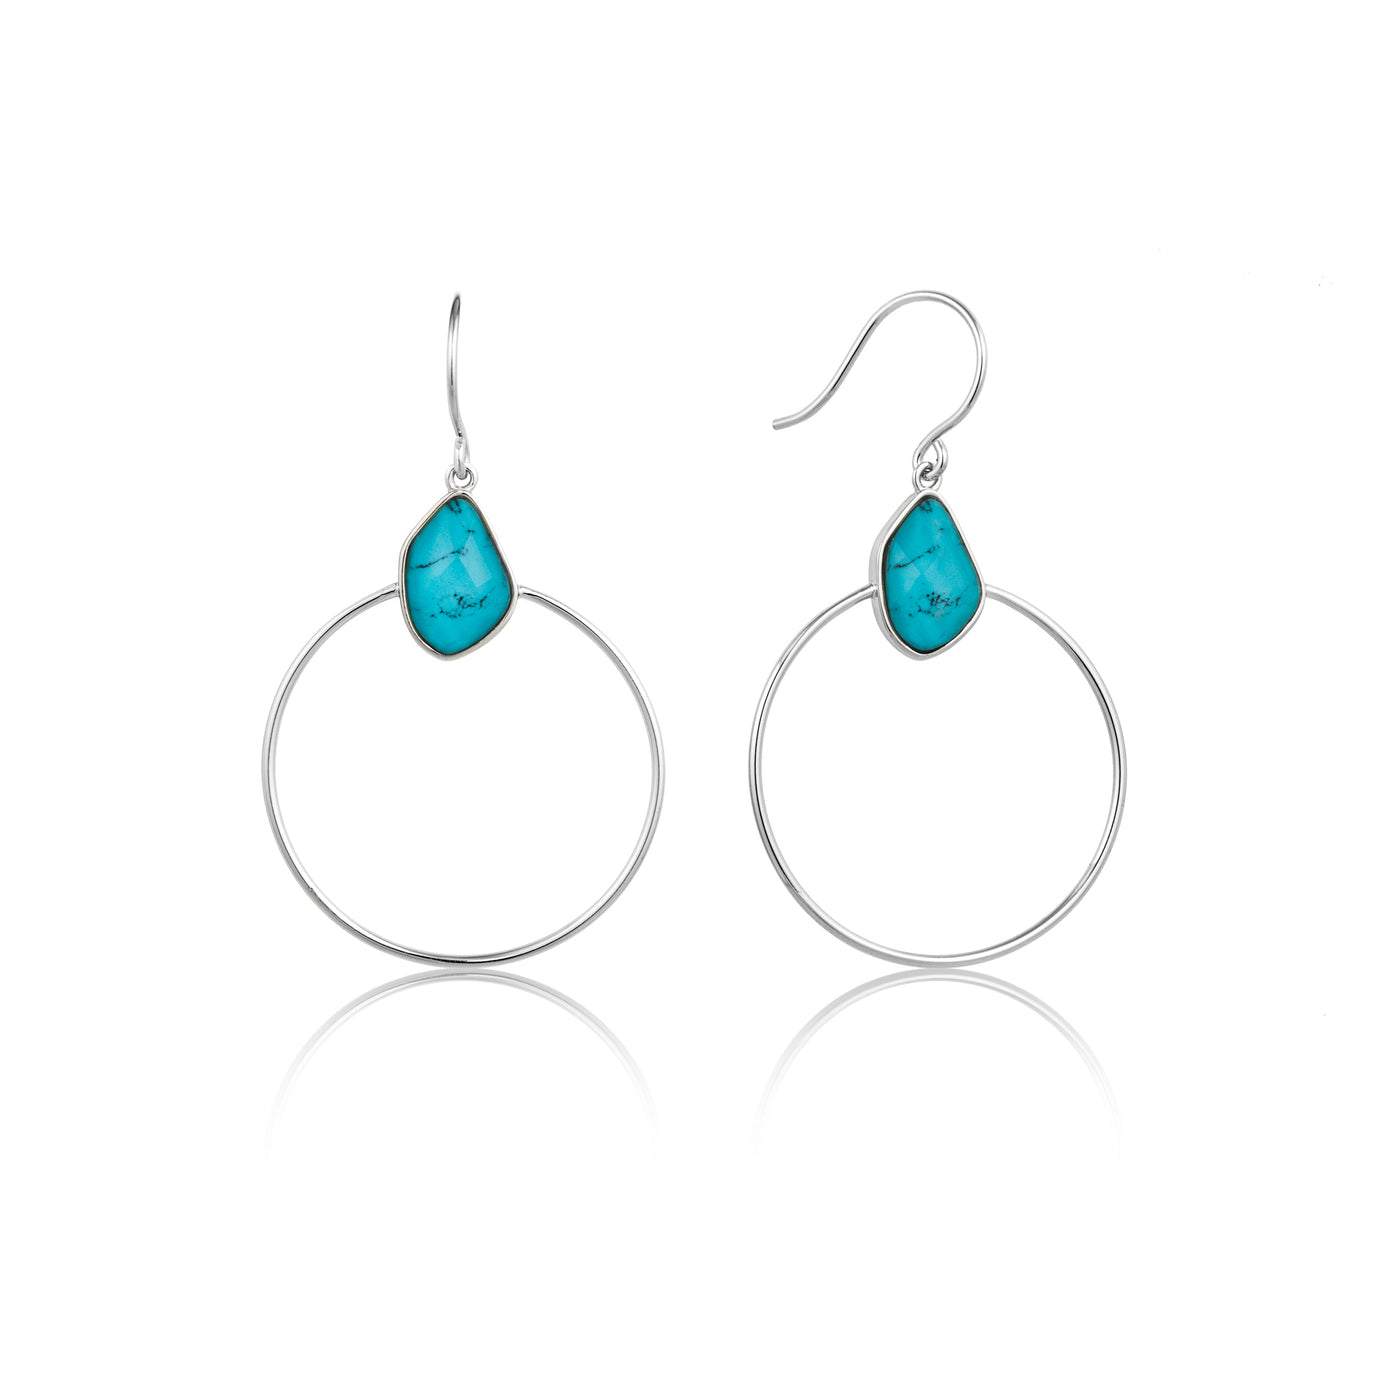 Ania Haie Turquoise Front Hoop Silver Earrings E014-02G E014-02H